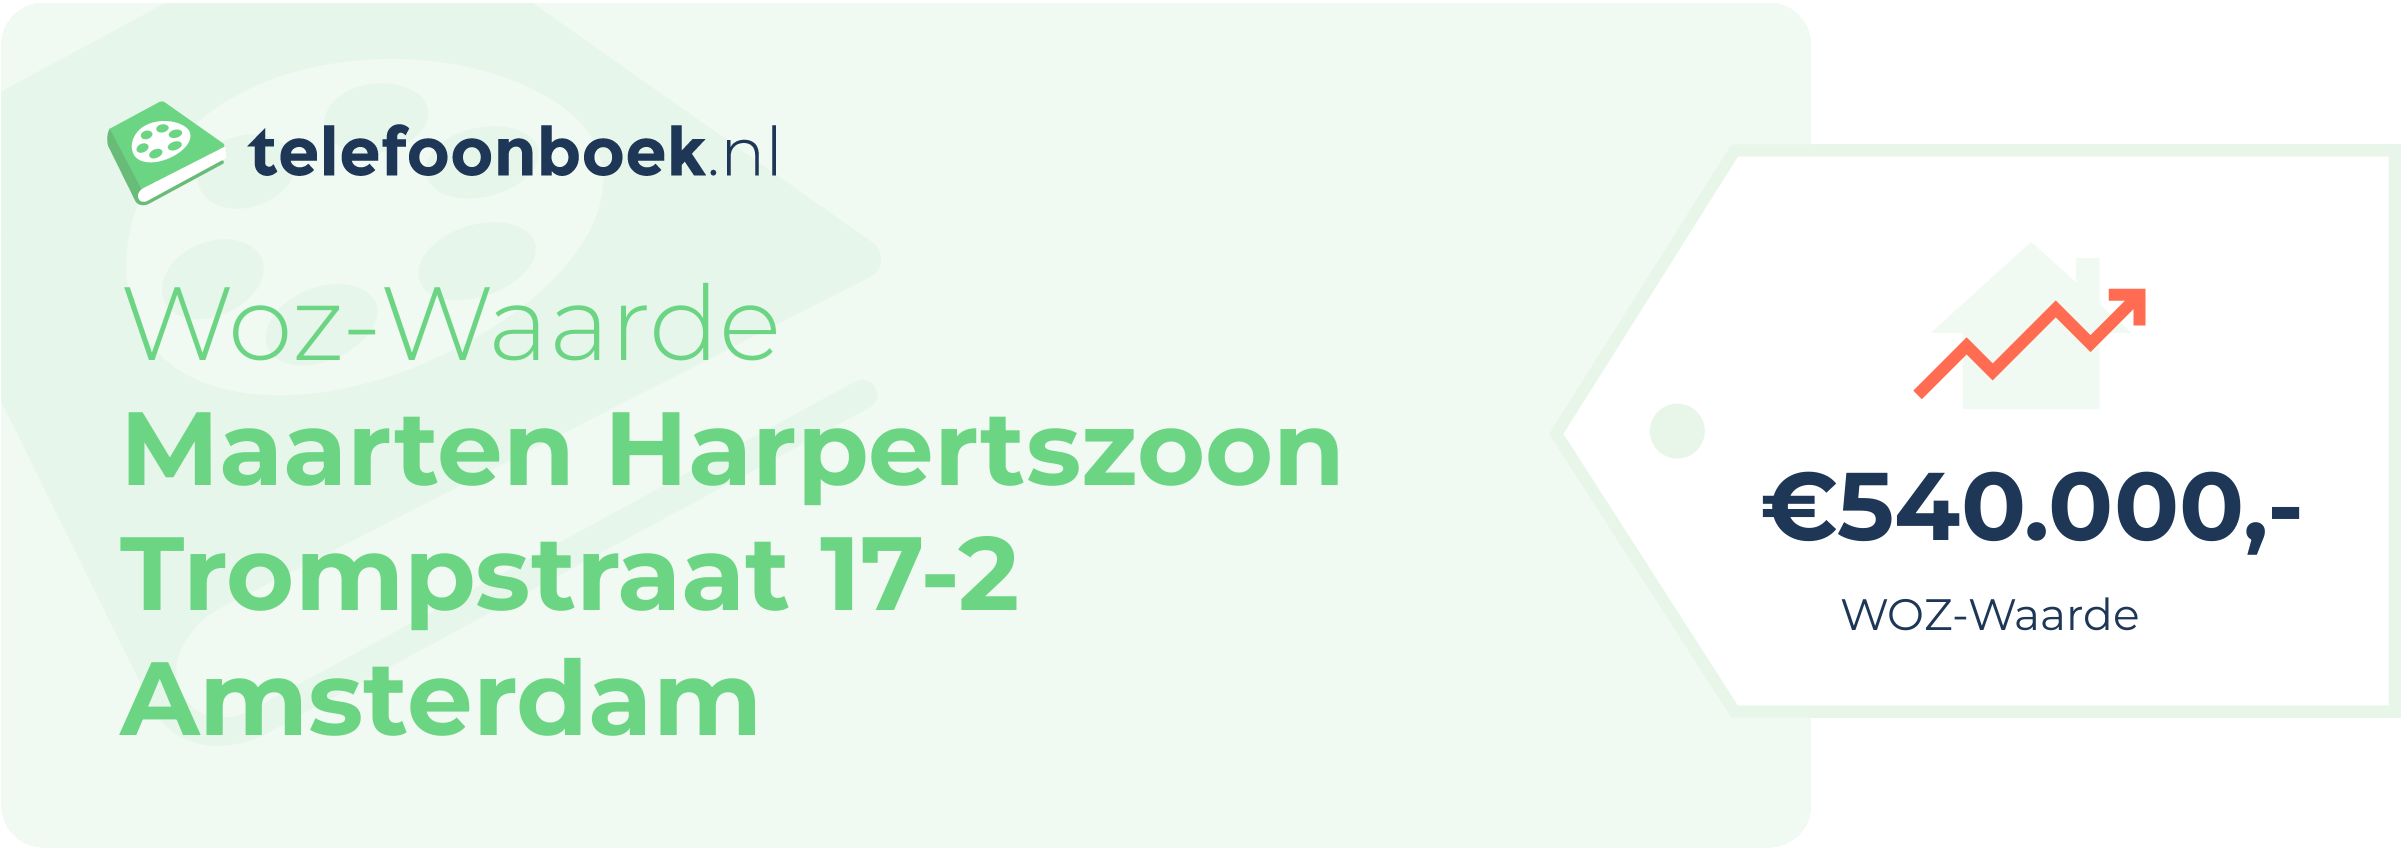 WOZ-waarde Maarten Harpertszoon Trompstraat 17-2 Amsterdam